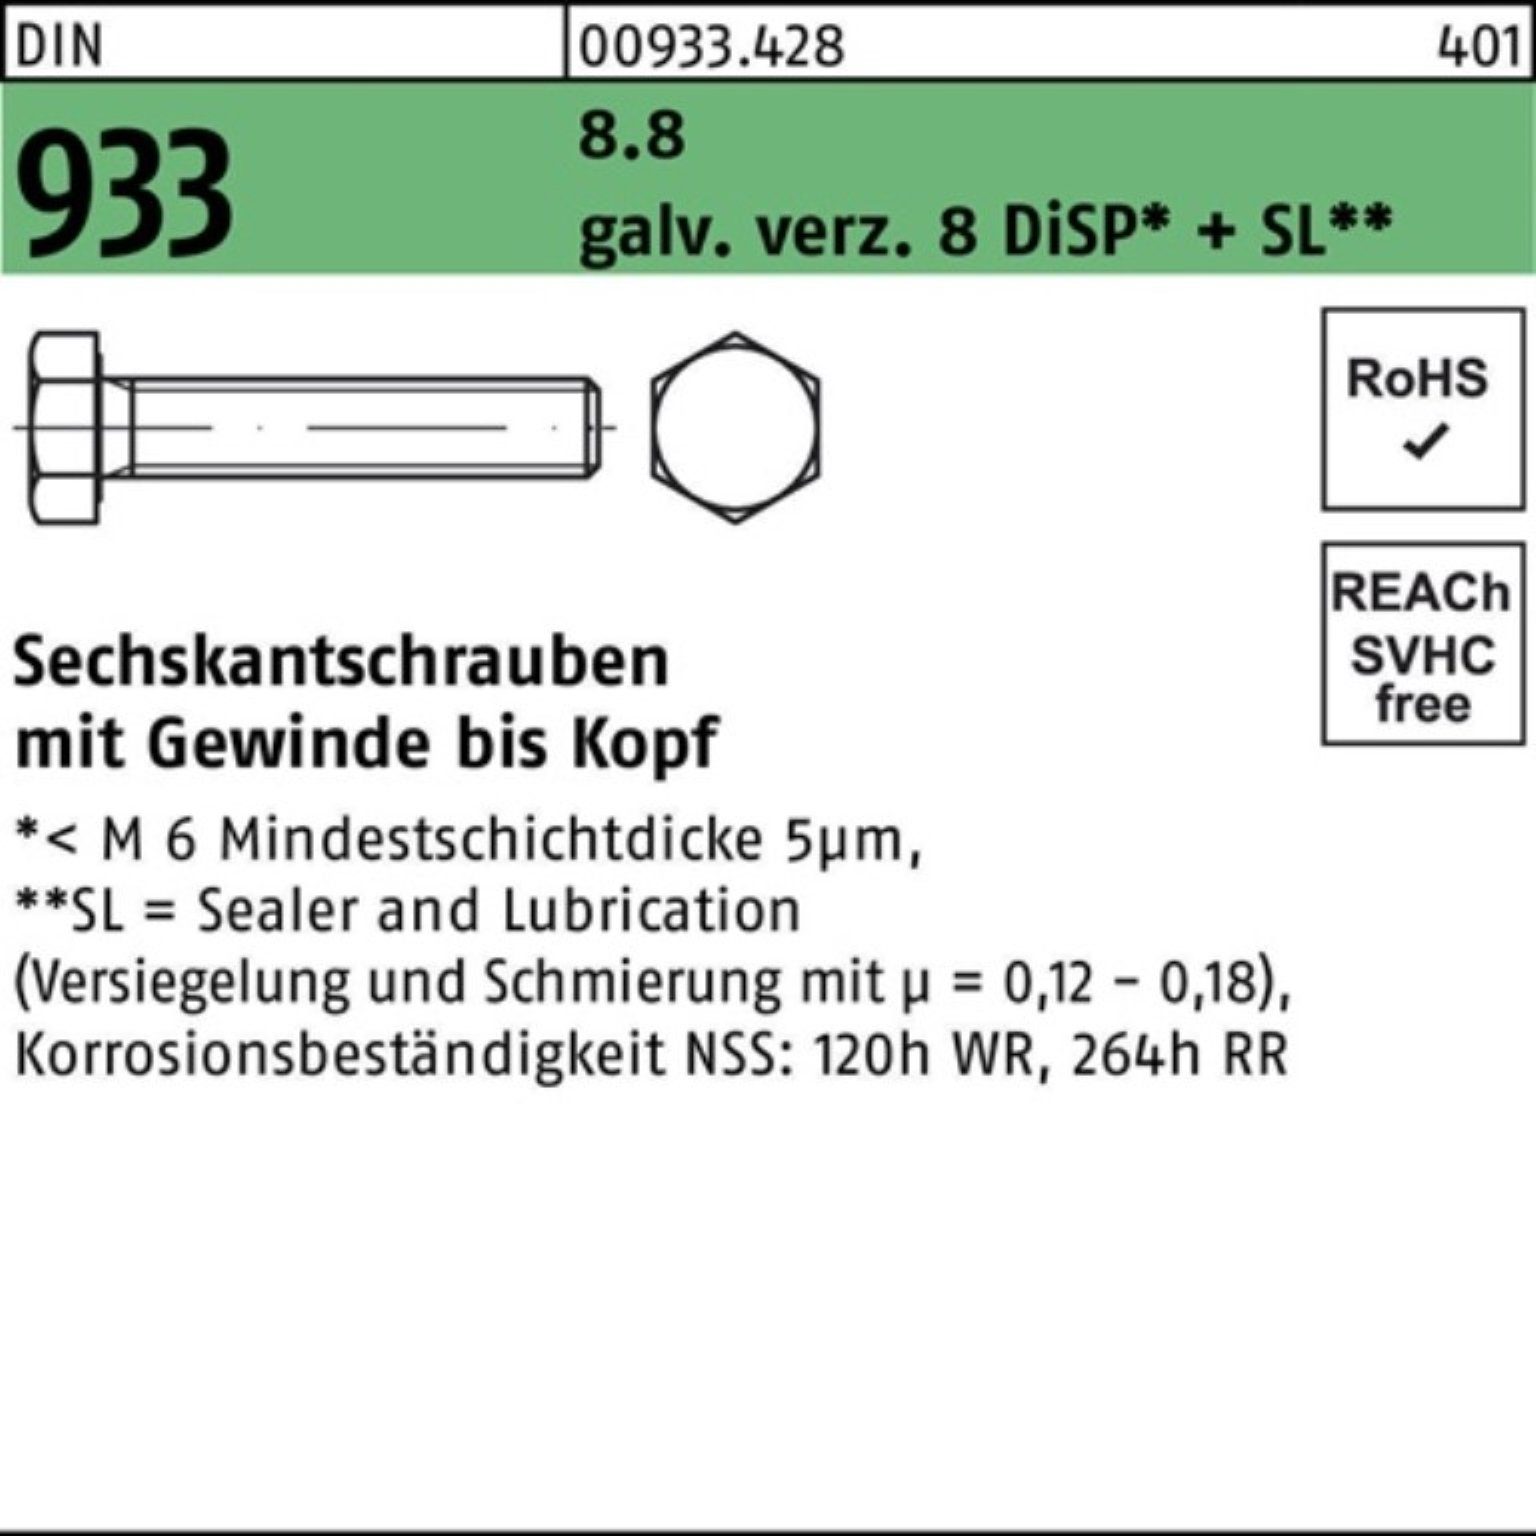 Reyher Sechskantschraube 200er Pack Sechskantschraube DIN 933 VG M6x 55 8.8 gal Zn 8 DiSP + SL